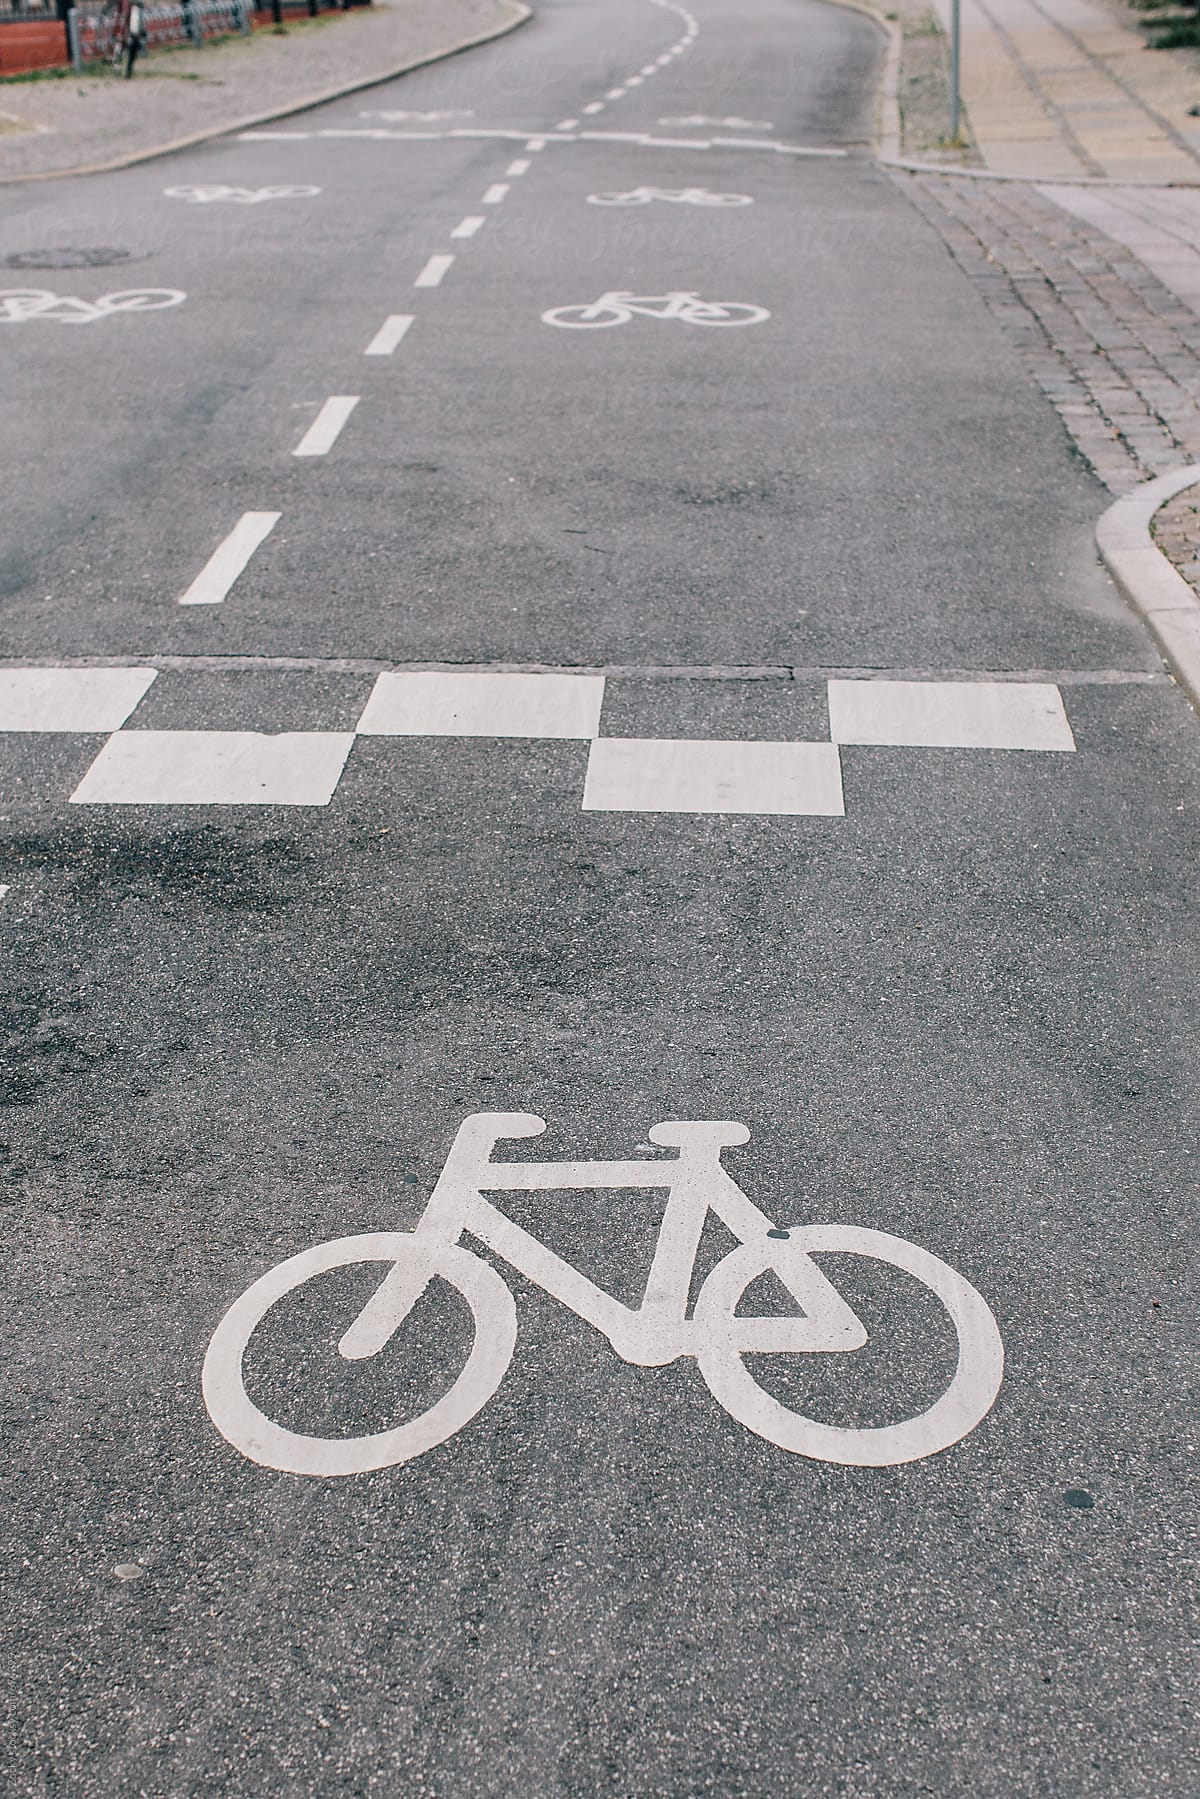 Bicycle lane sign on the asphalt